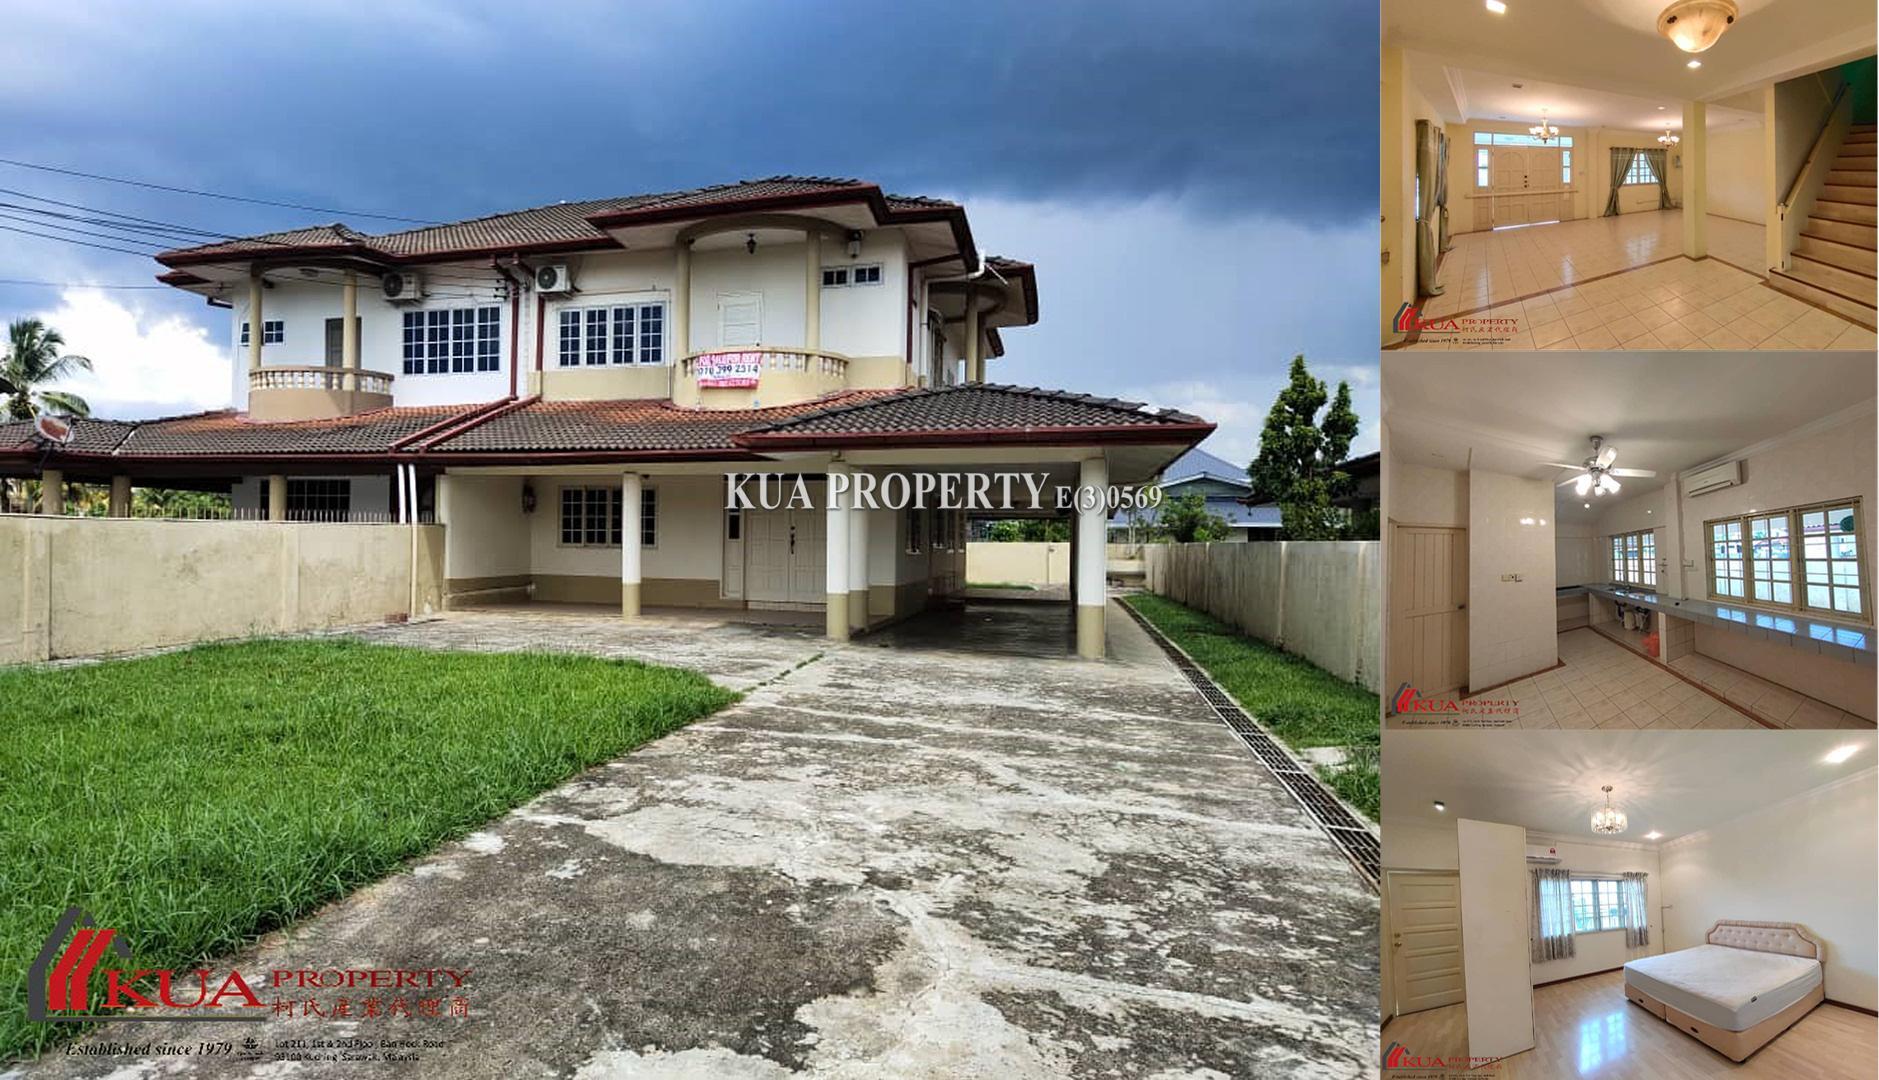 Double Storey Semi-Detached House For Sale! at Jalan Intan, Nanas Barat